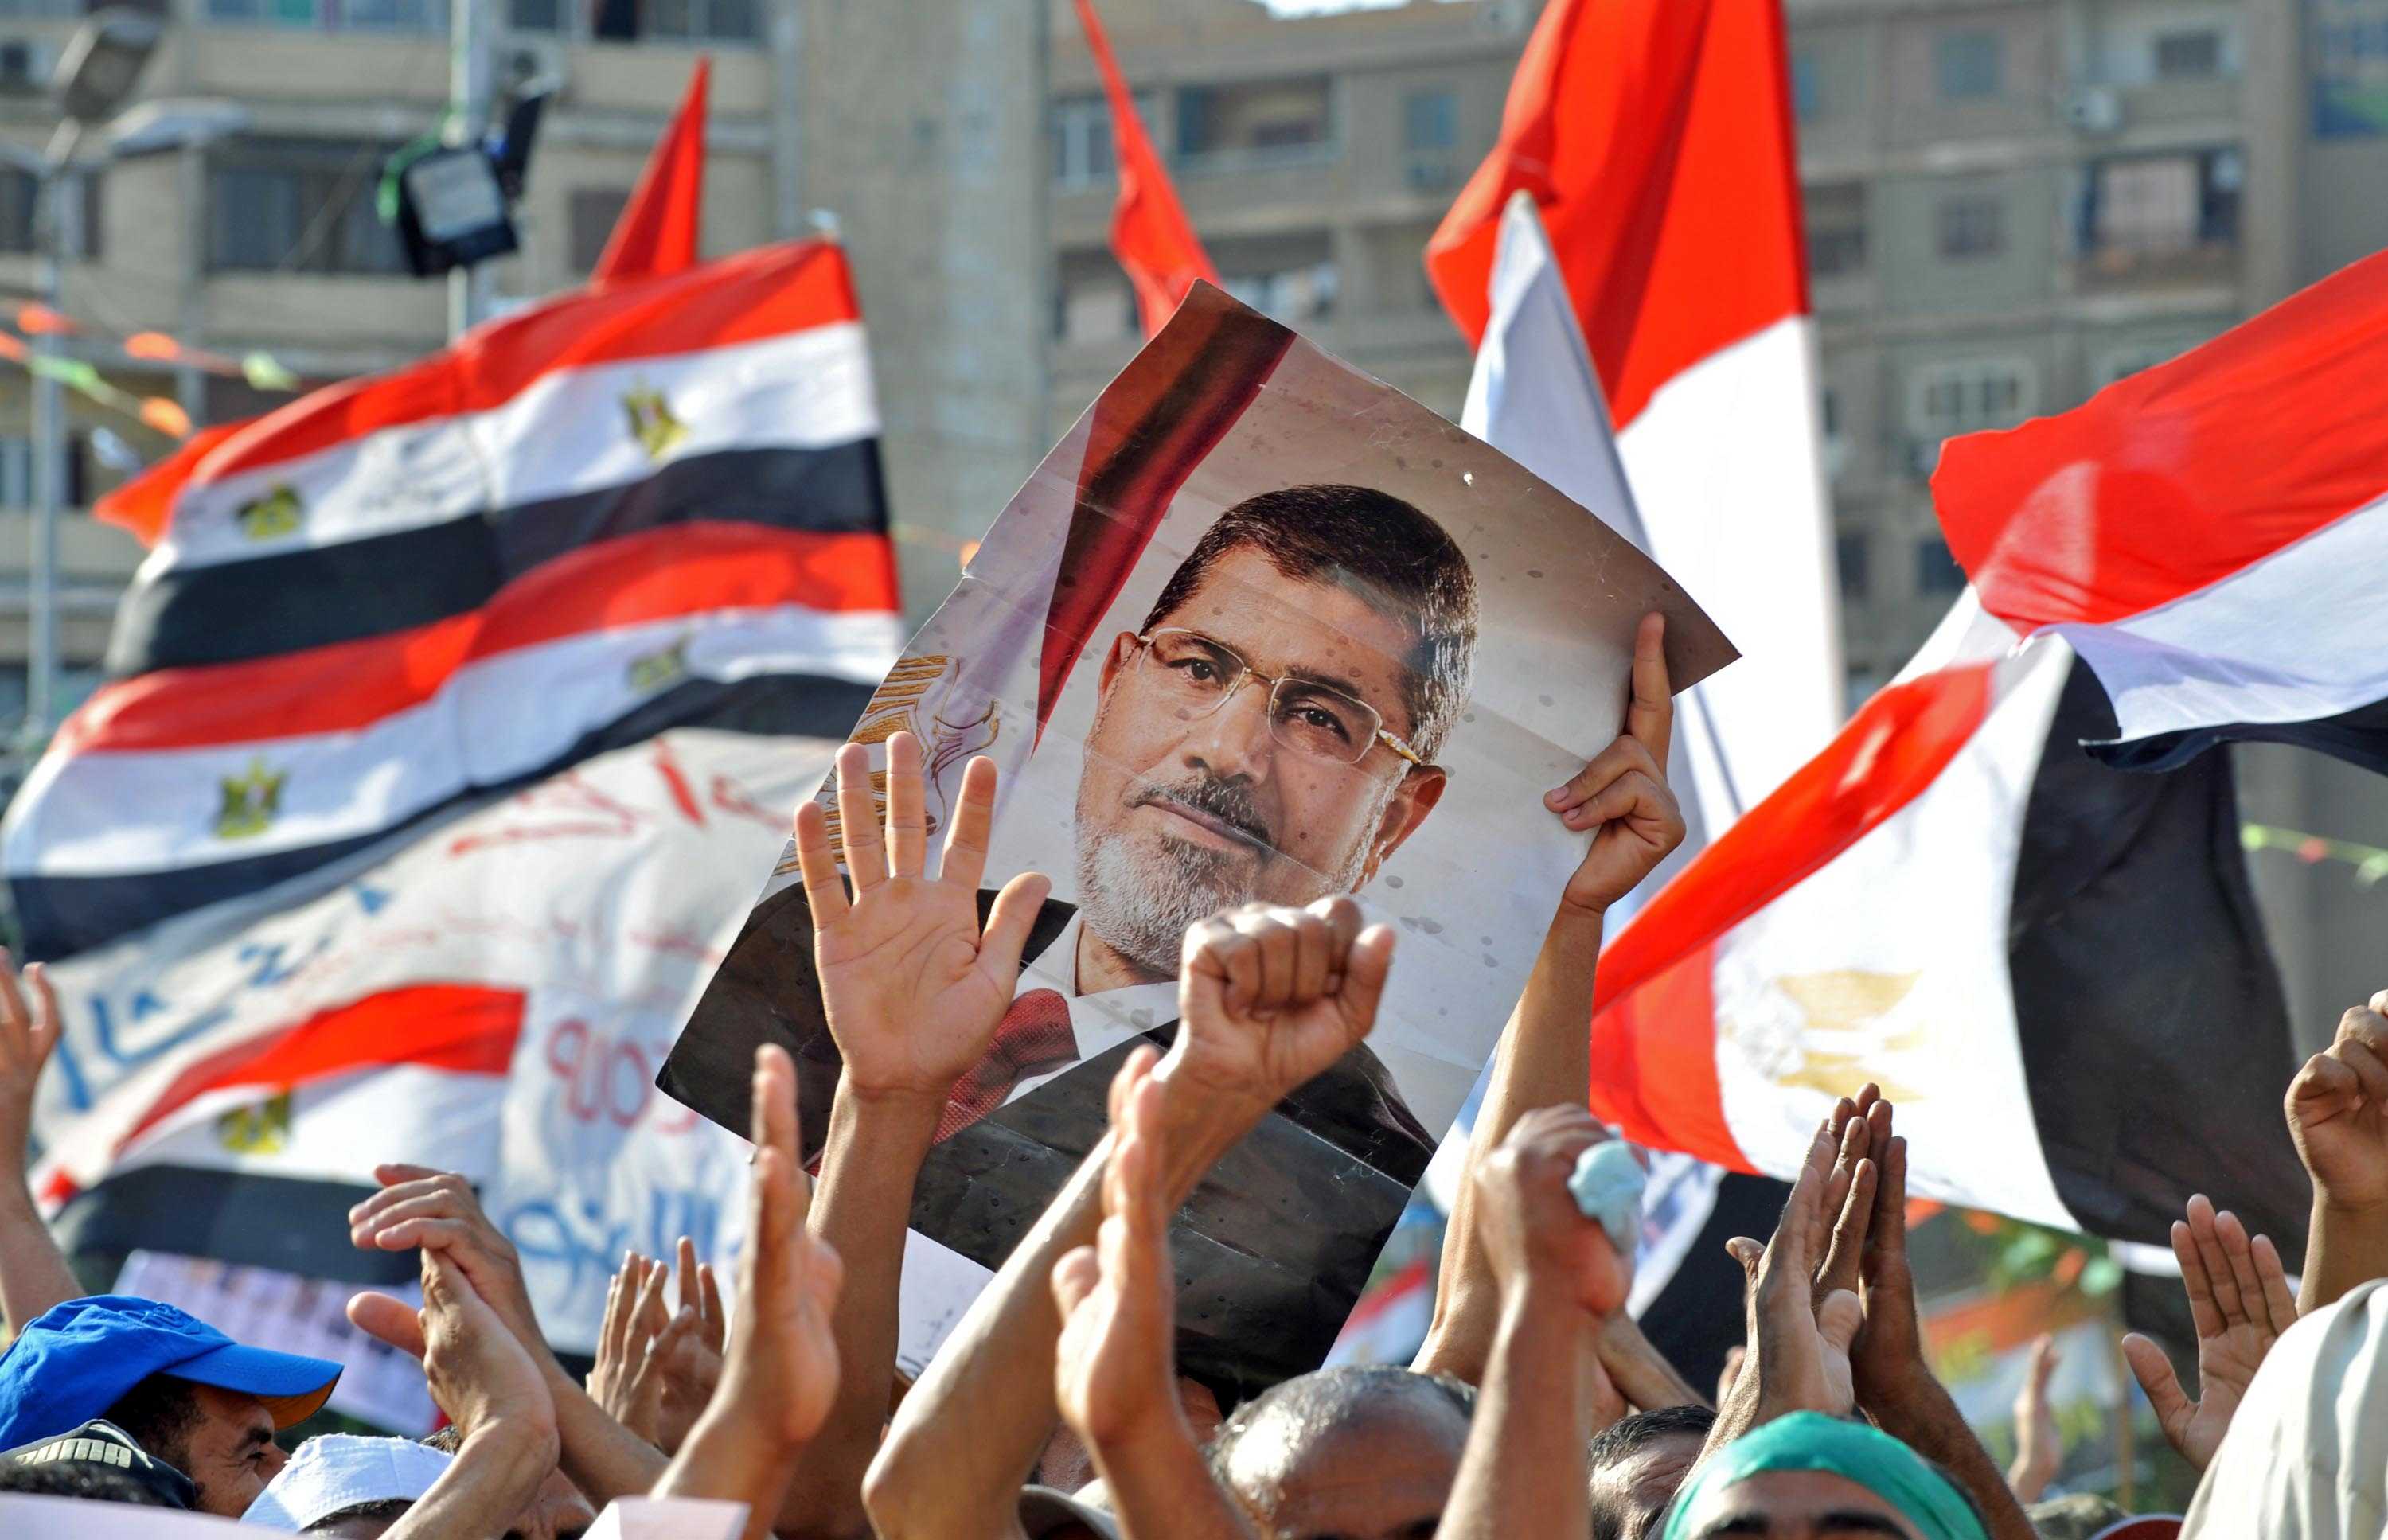 Morsi supporter has life prison sentence slashed to 6 months after showing up